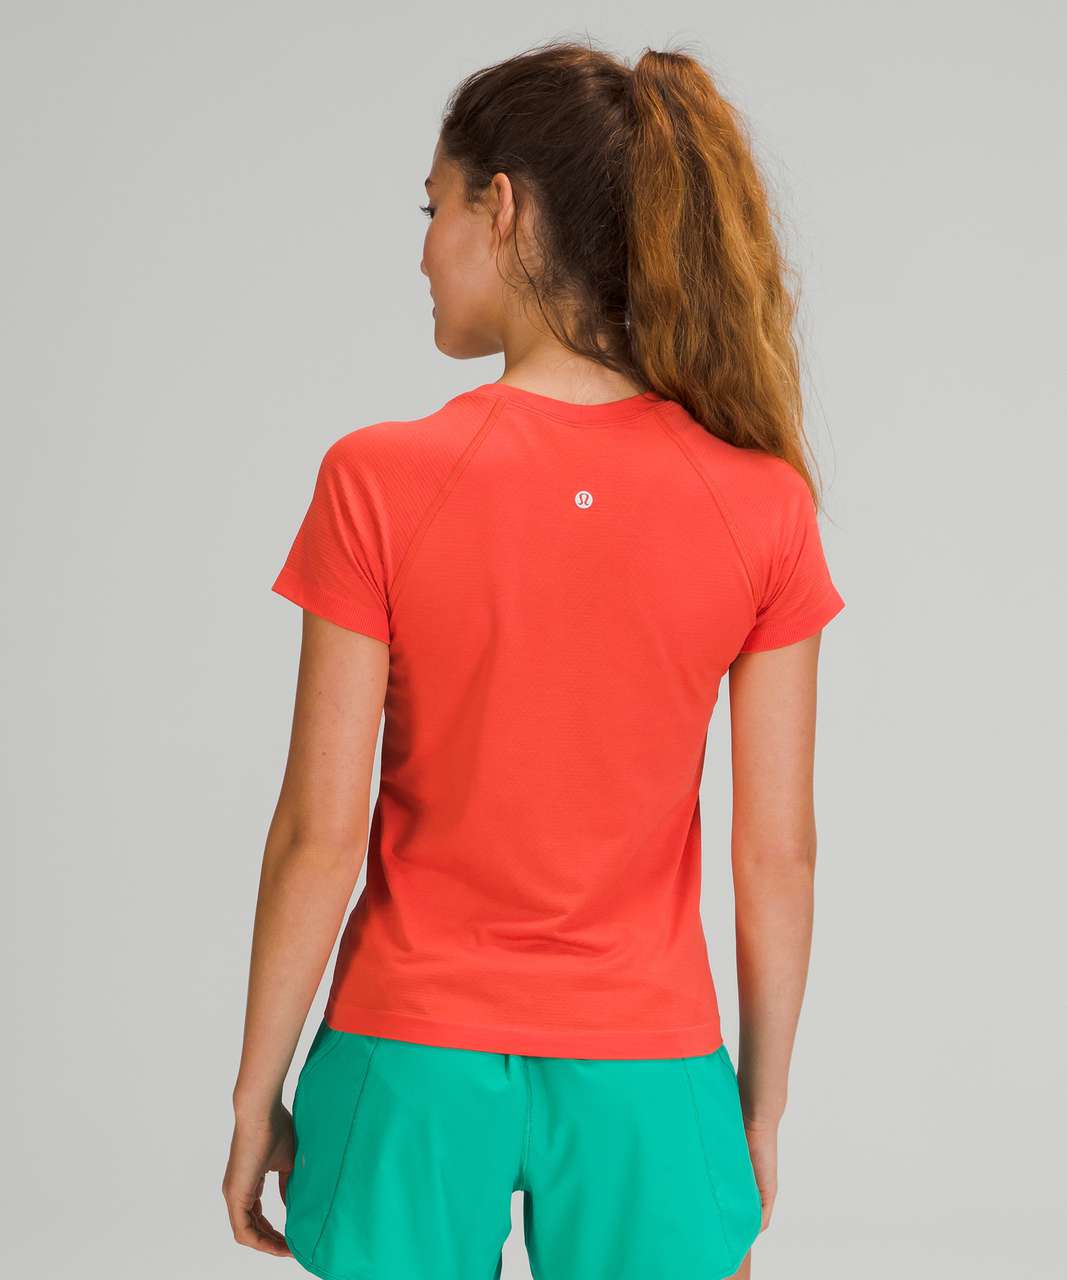 Lululemon Swiftly Tech Short Sleeve Shirt 2.0 *Race Length - Autumn Red / Autumn Red